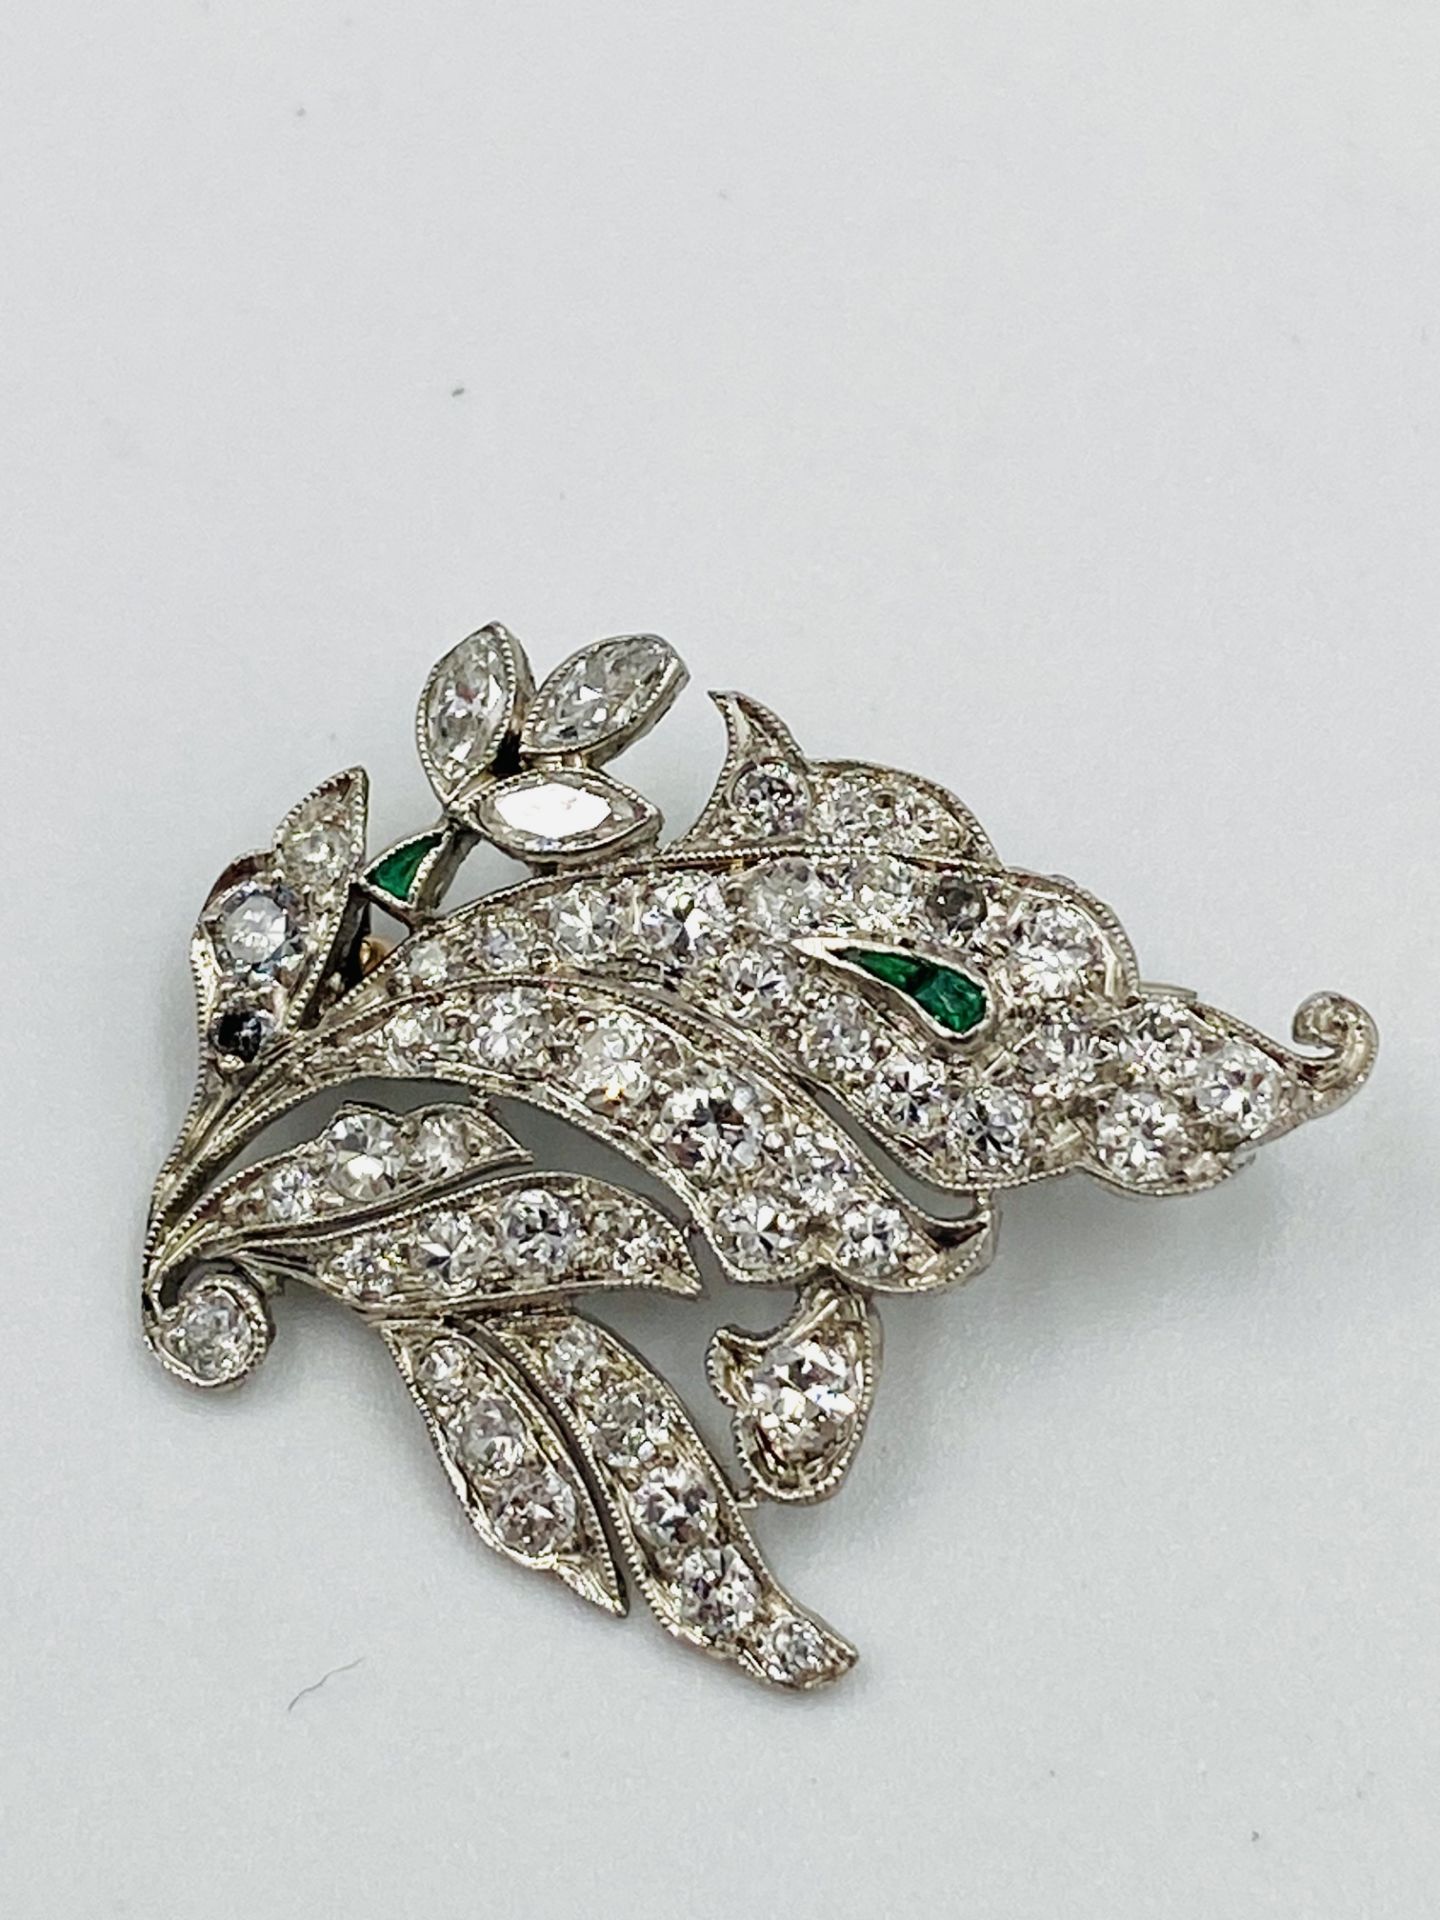 Emerald and diamond brooch - Image 3 of 4